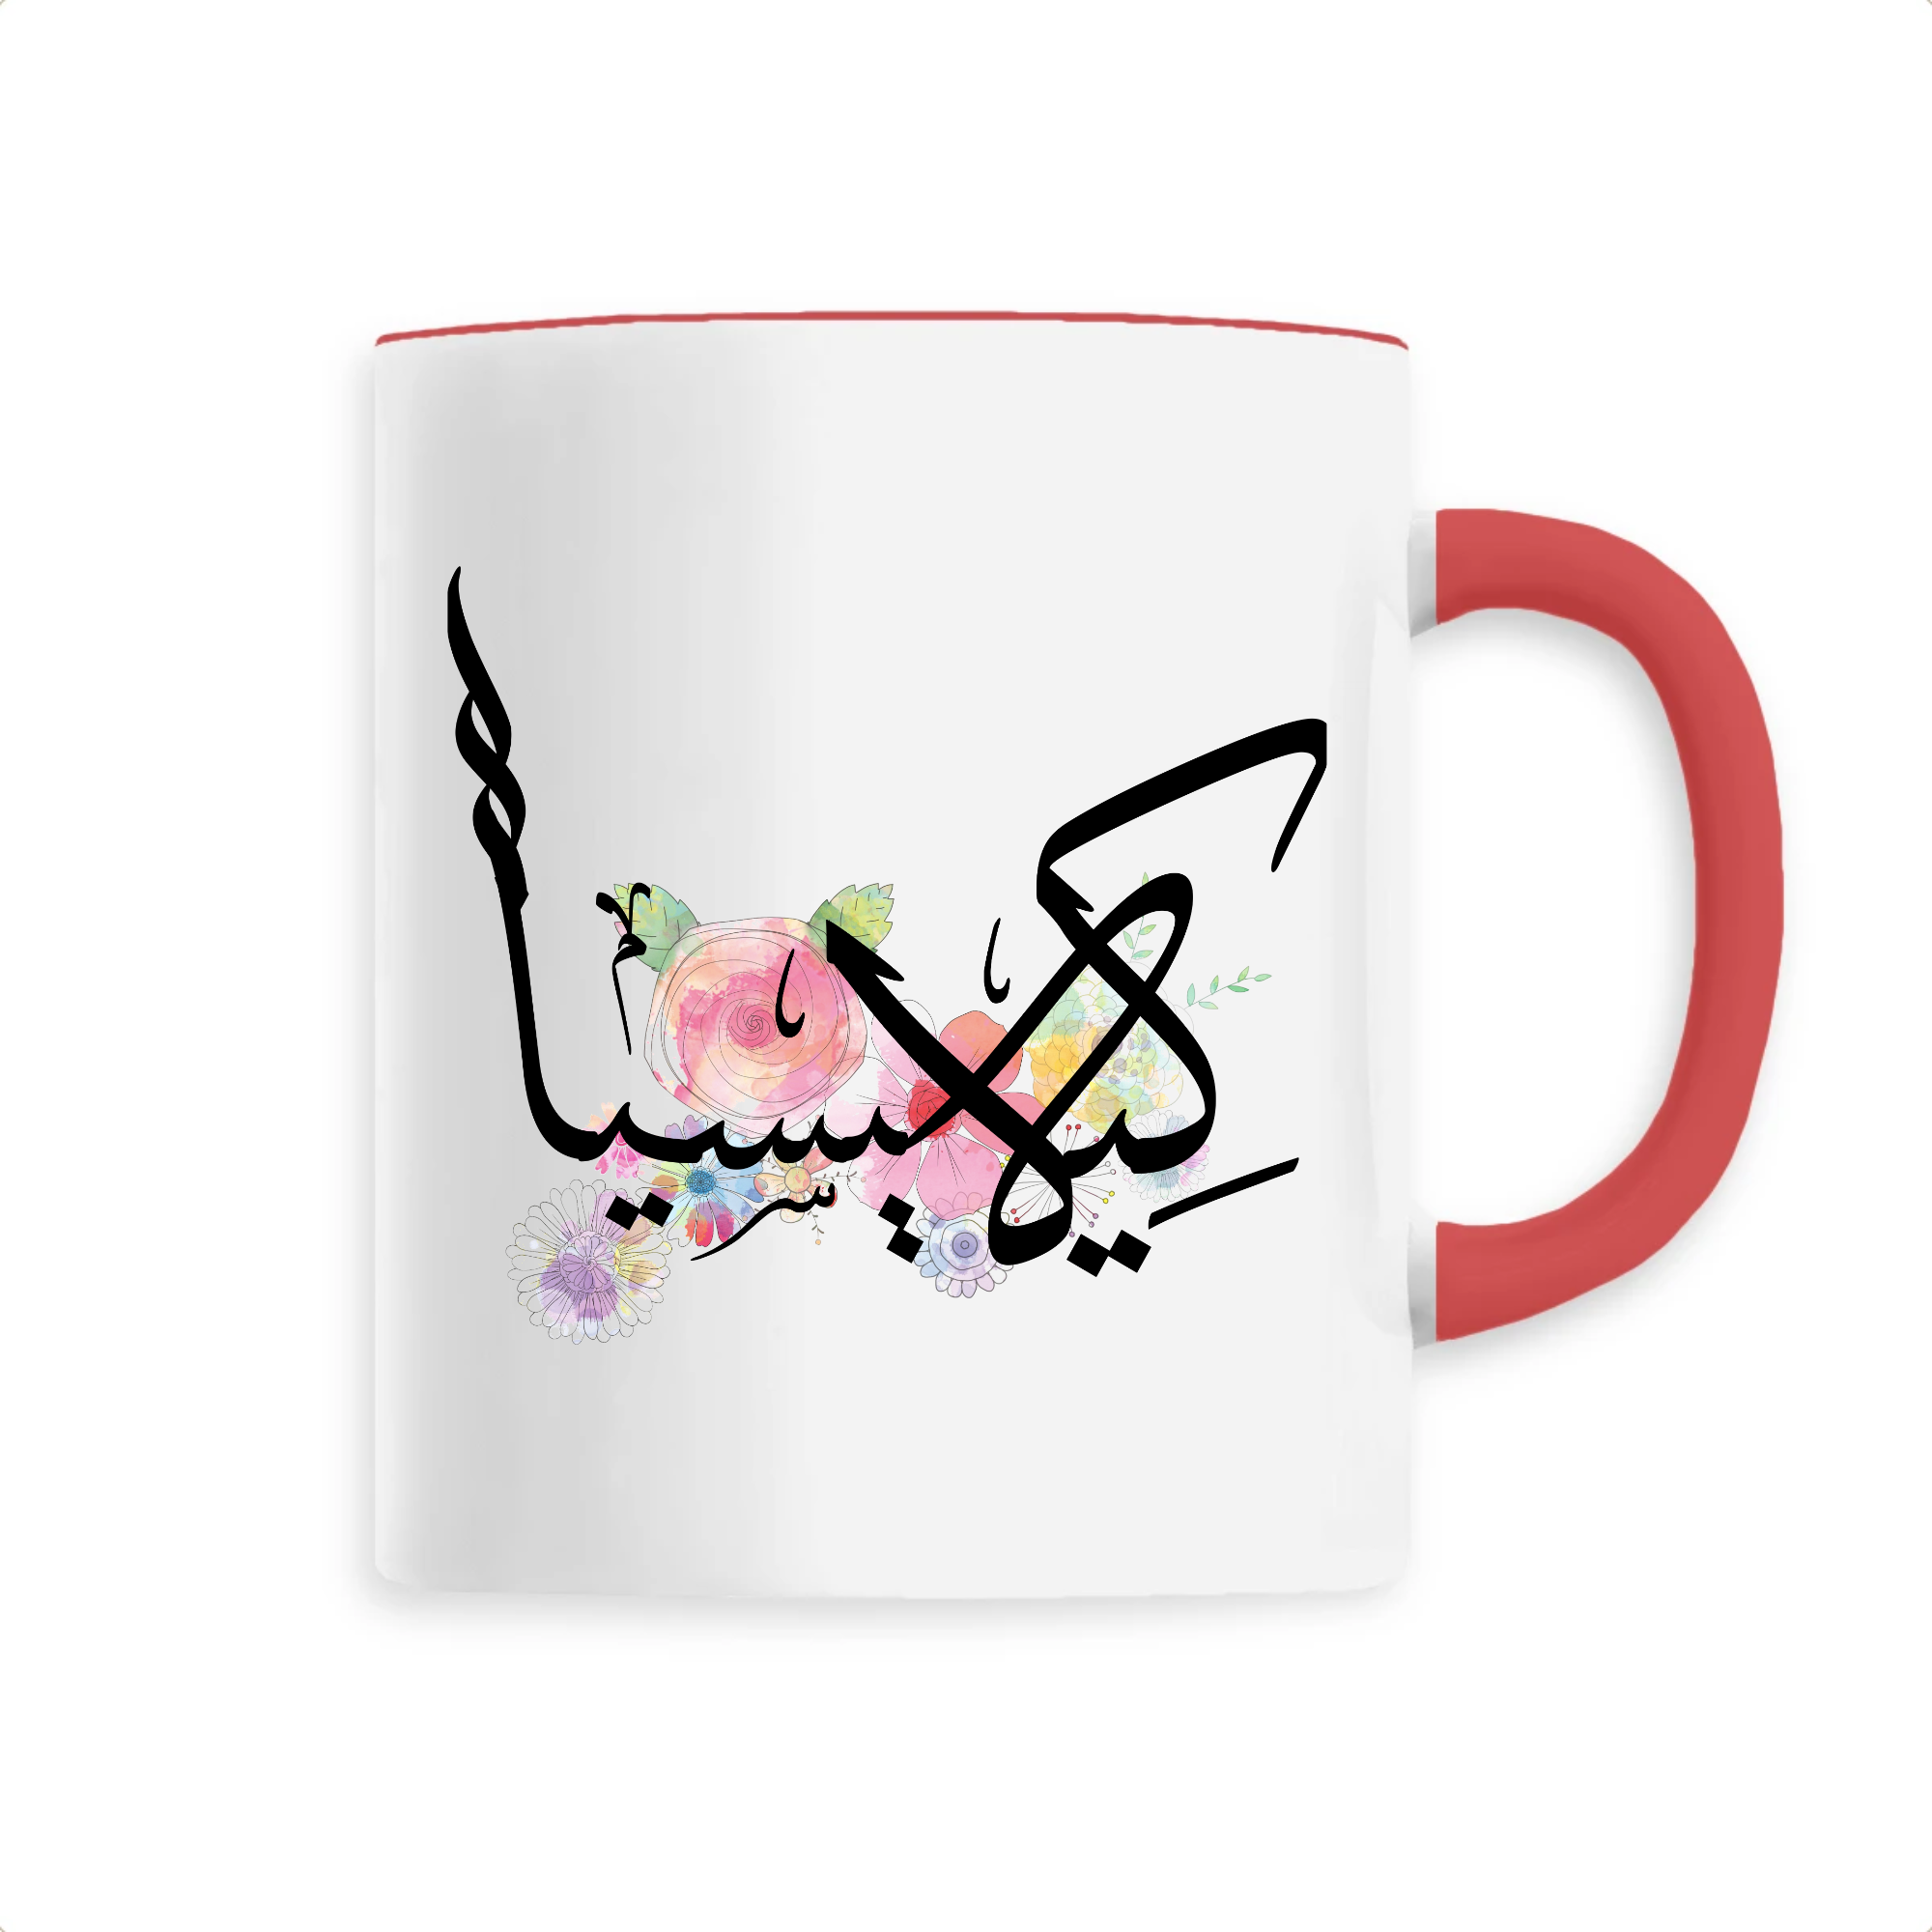 Kelysia - Mug Calligraphie Arabe